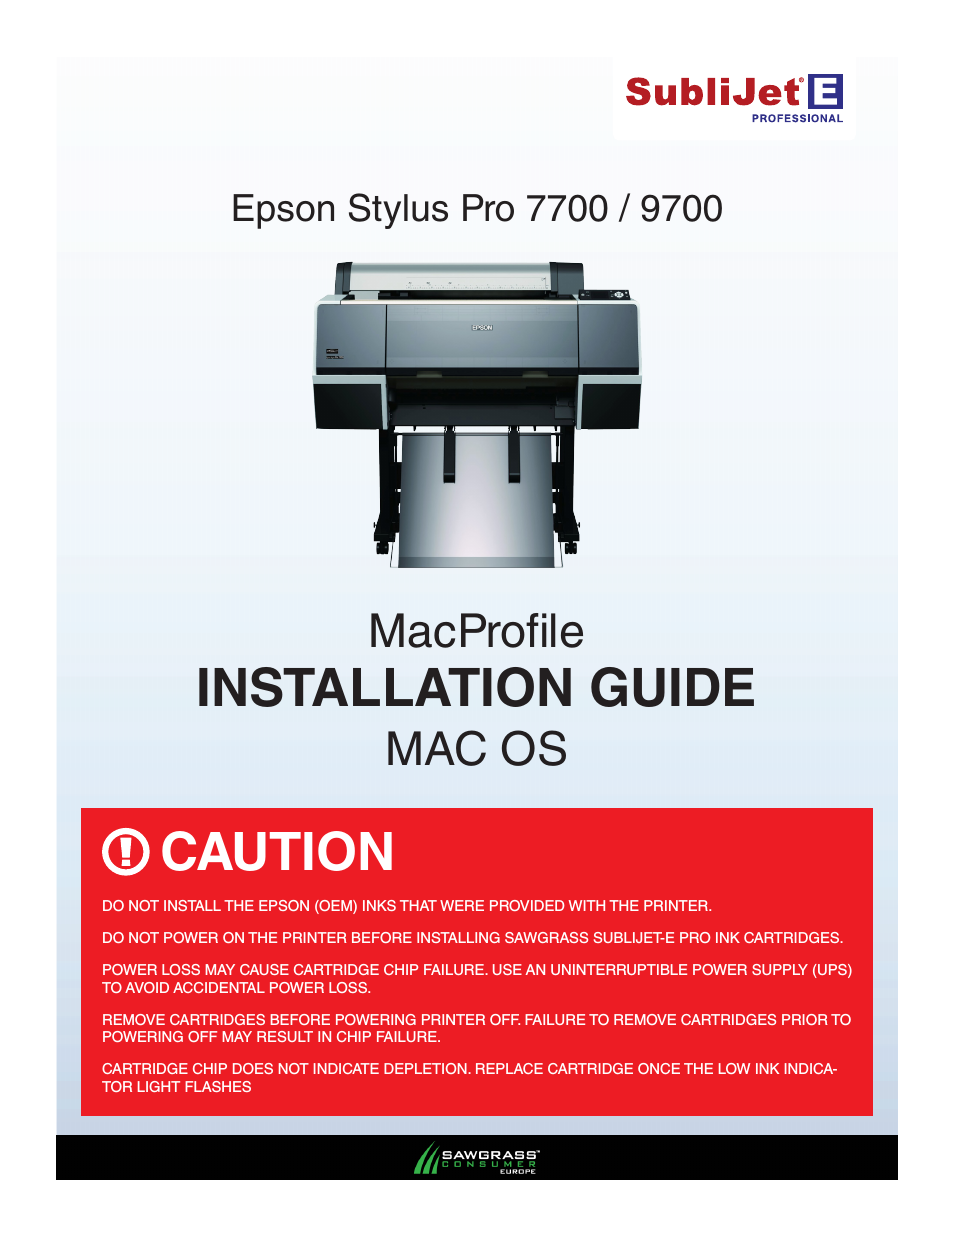 SubliJet E Epson Stylus Pro 7900 (Mac ICC Profile Setup): Printer/Profile Installation Guide